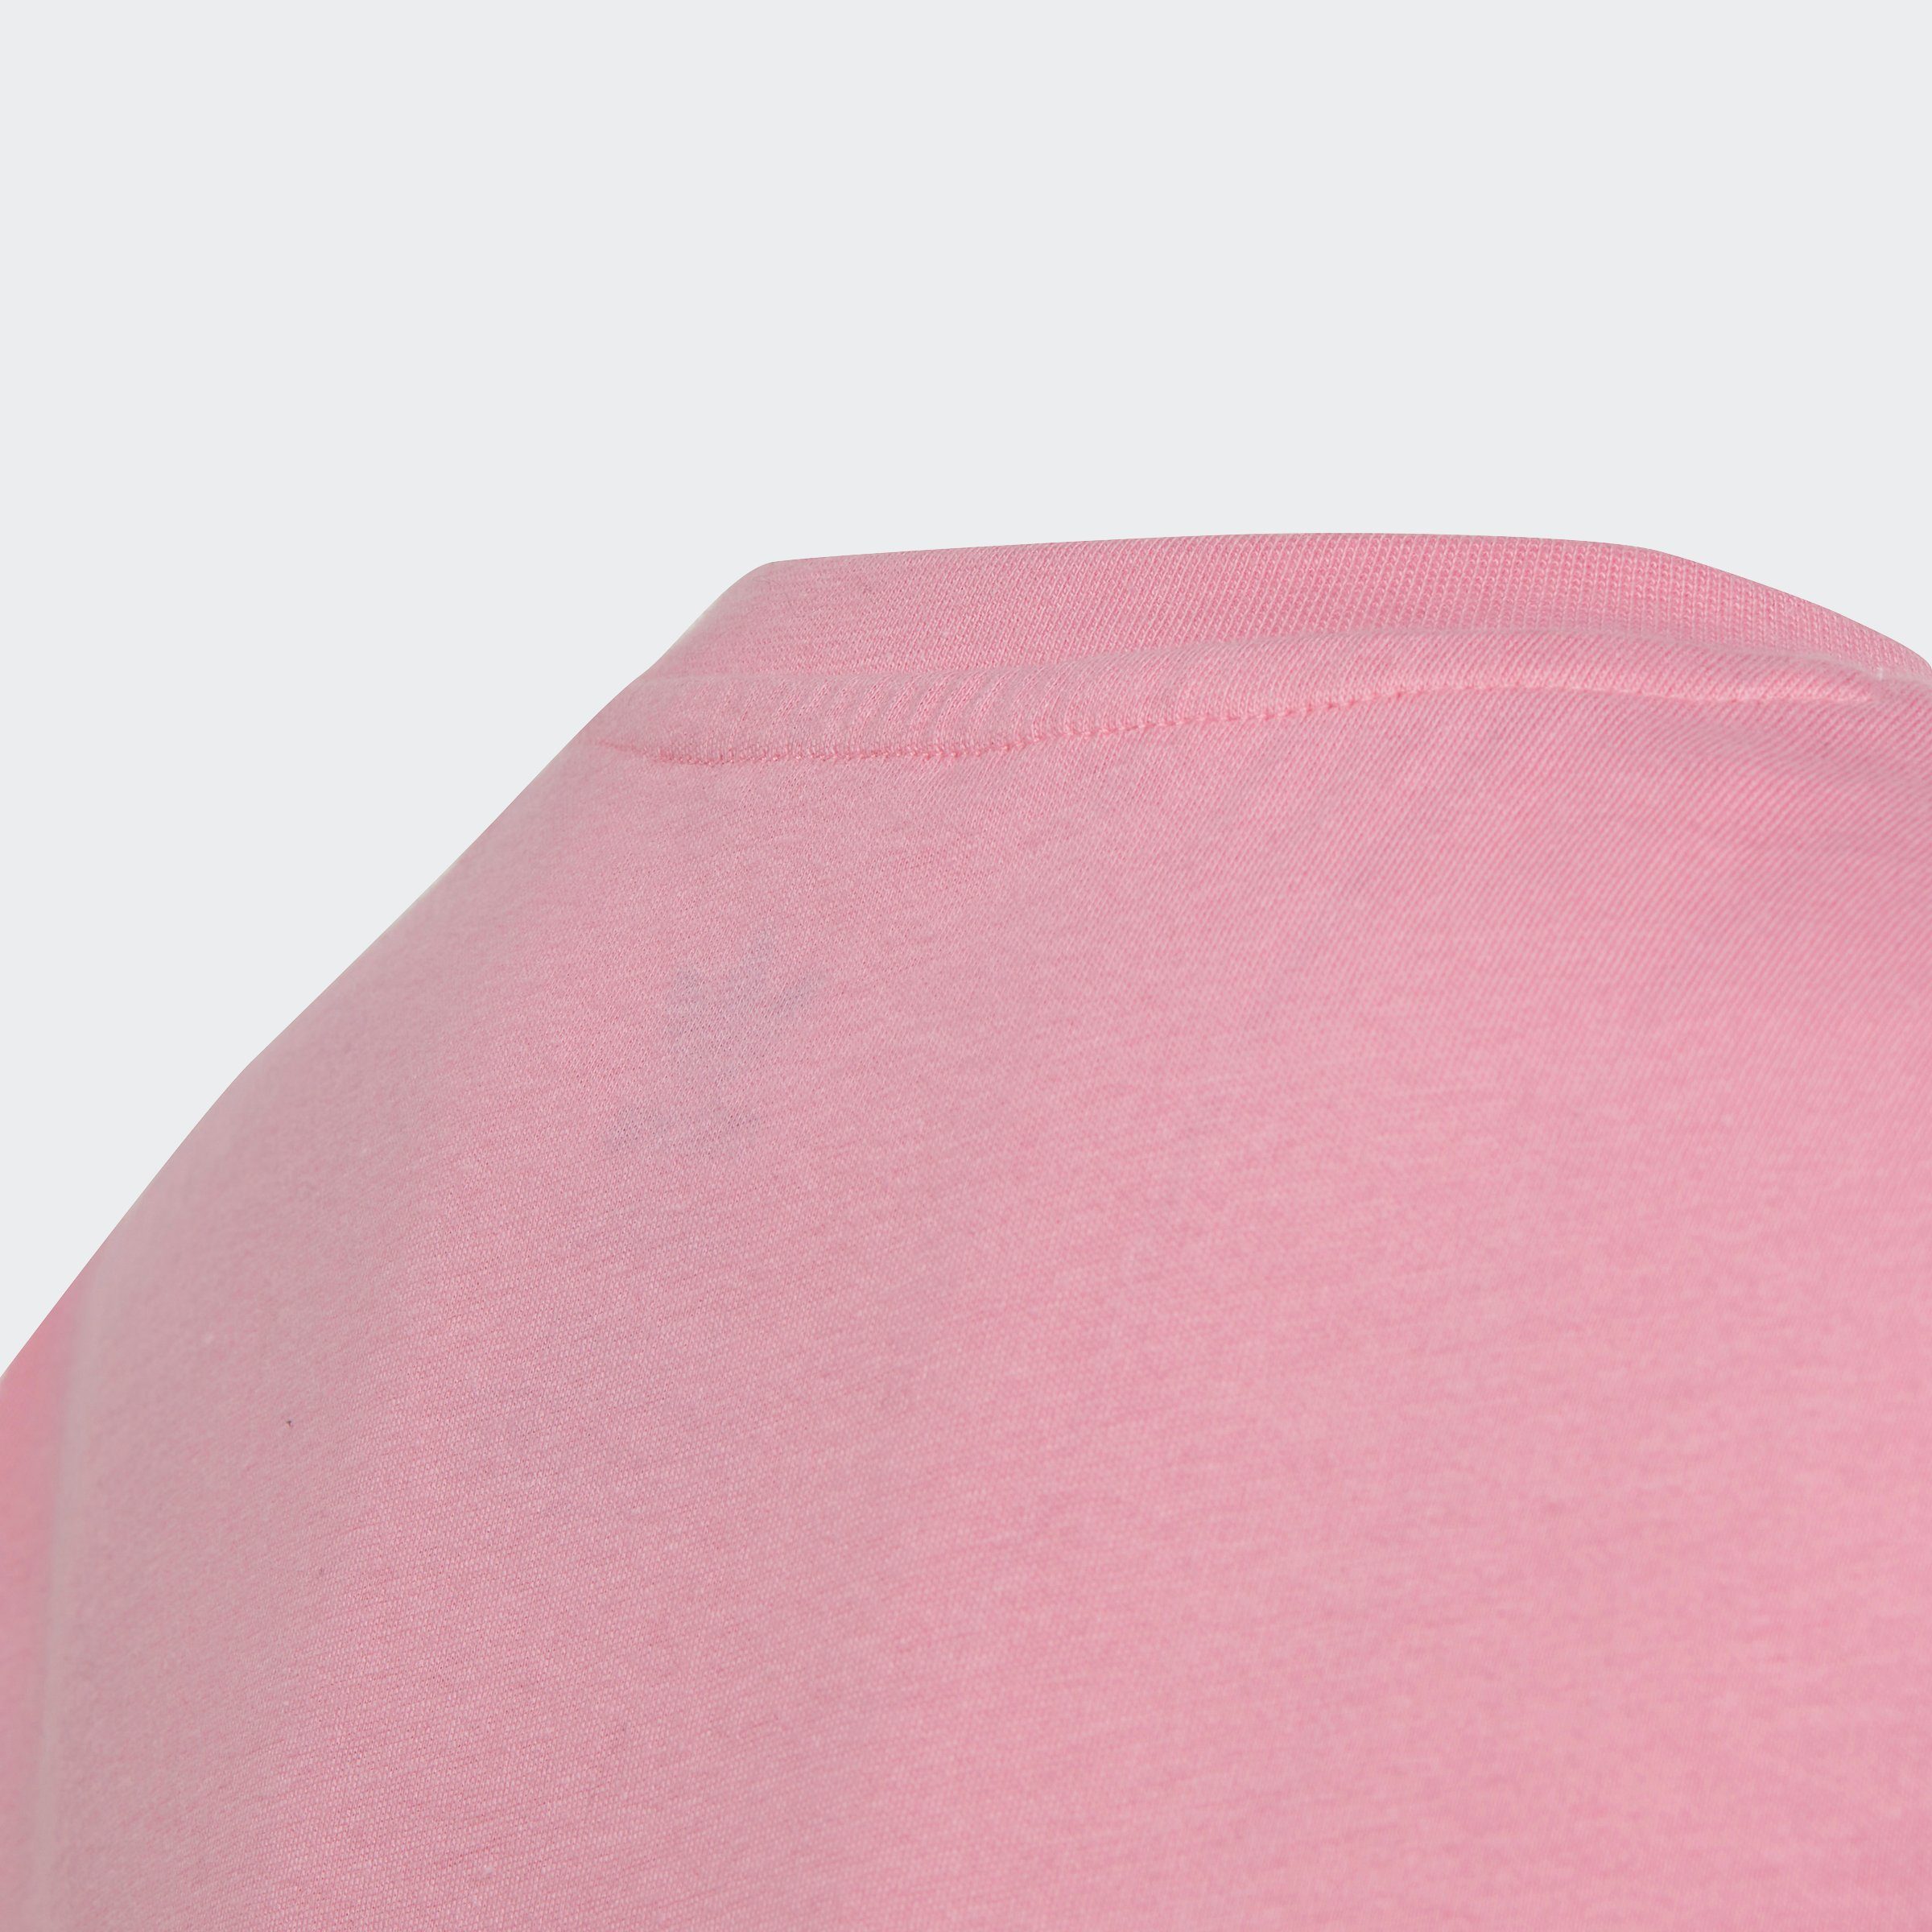 / TREFOIL adidas T-Shirt Unisex Bliss TEE White Originals Pink